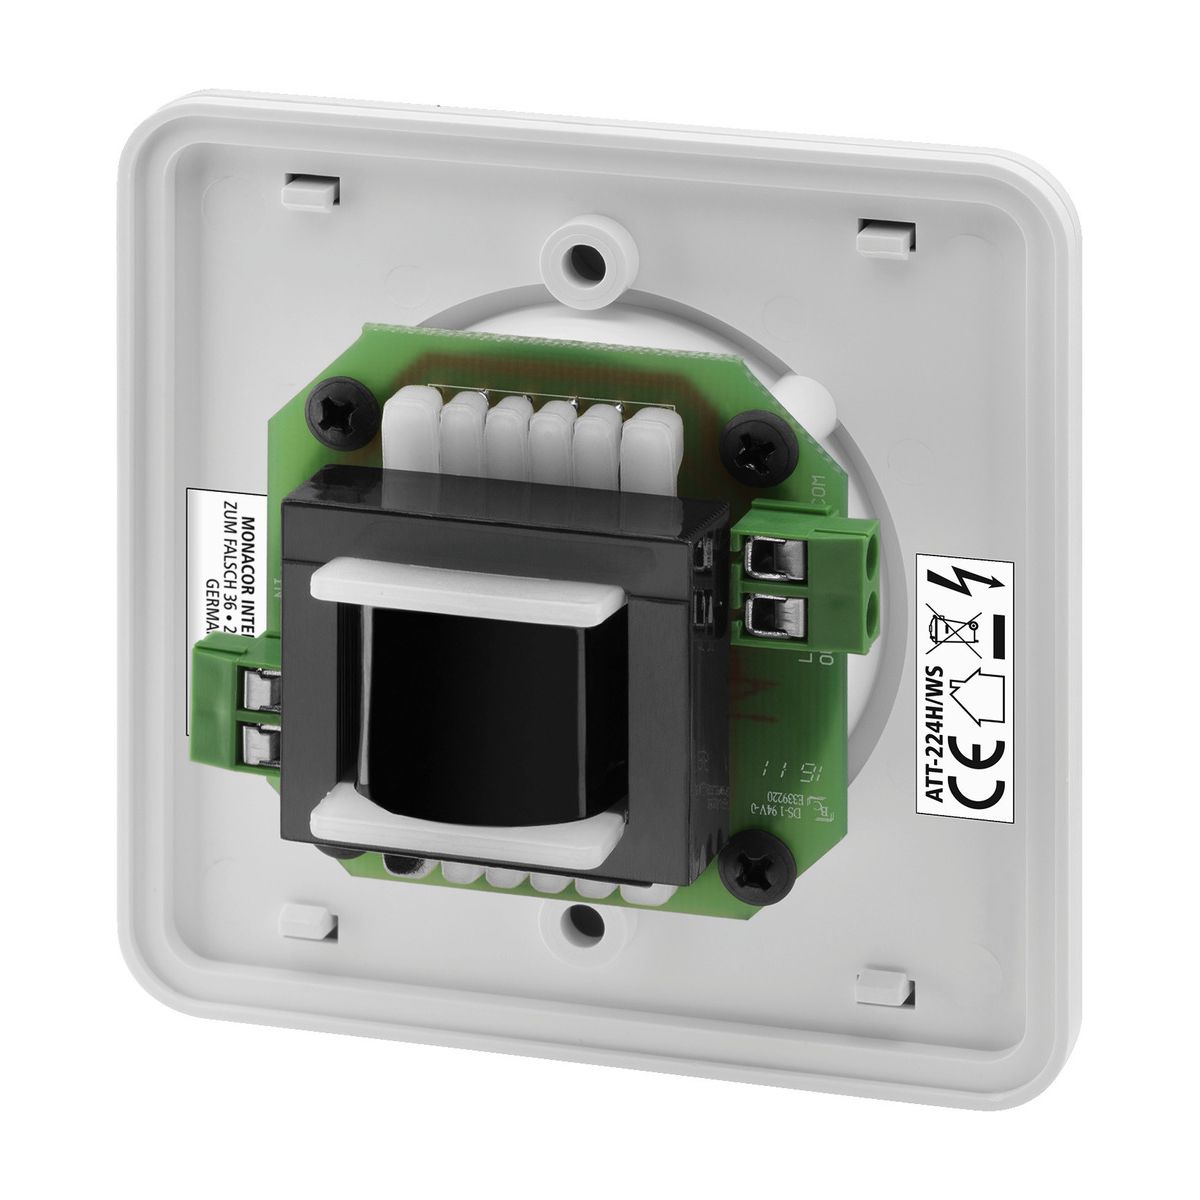 ATT-224H/WS | Wall-mounted PA volume control, 24 W-6445